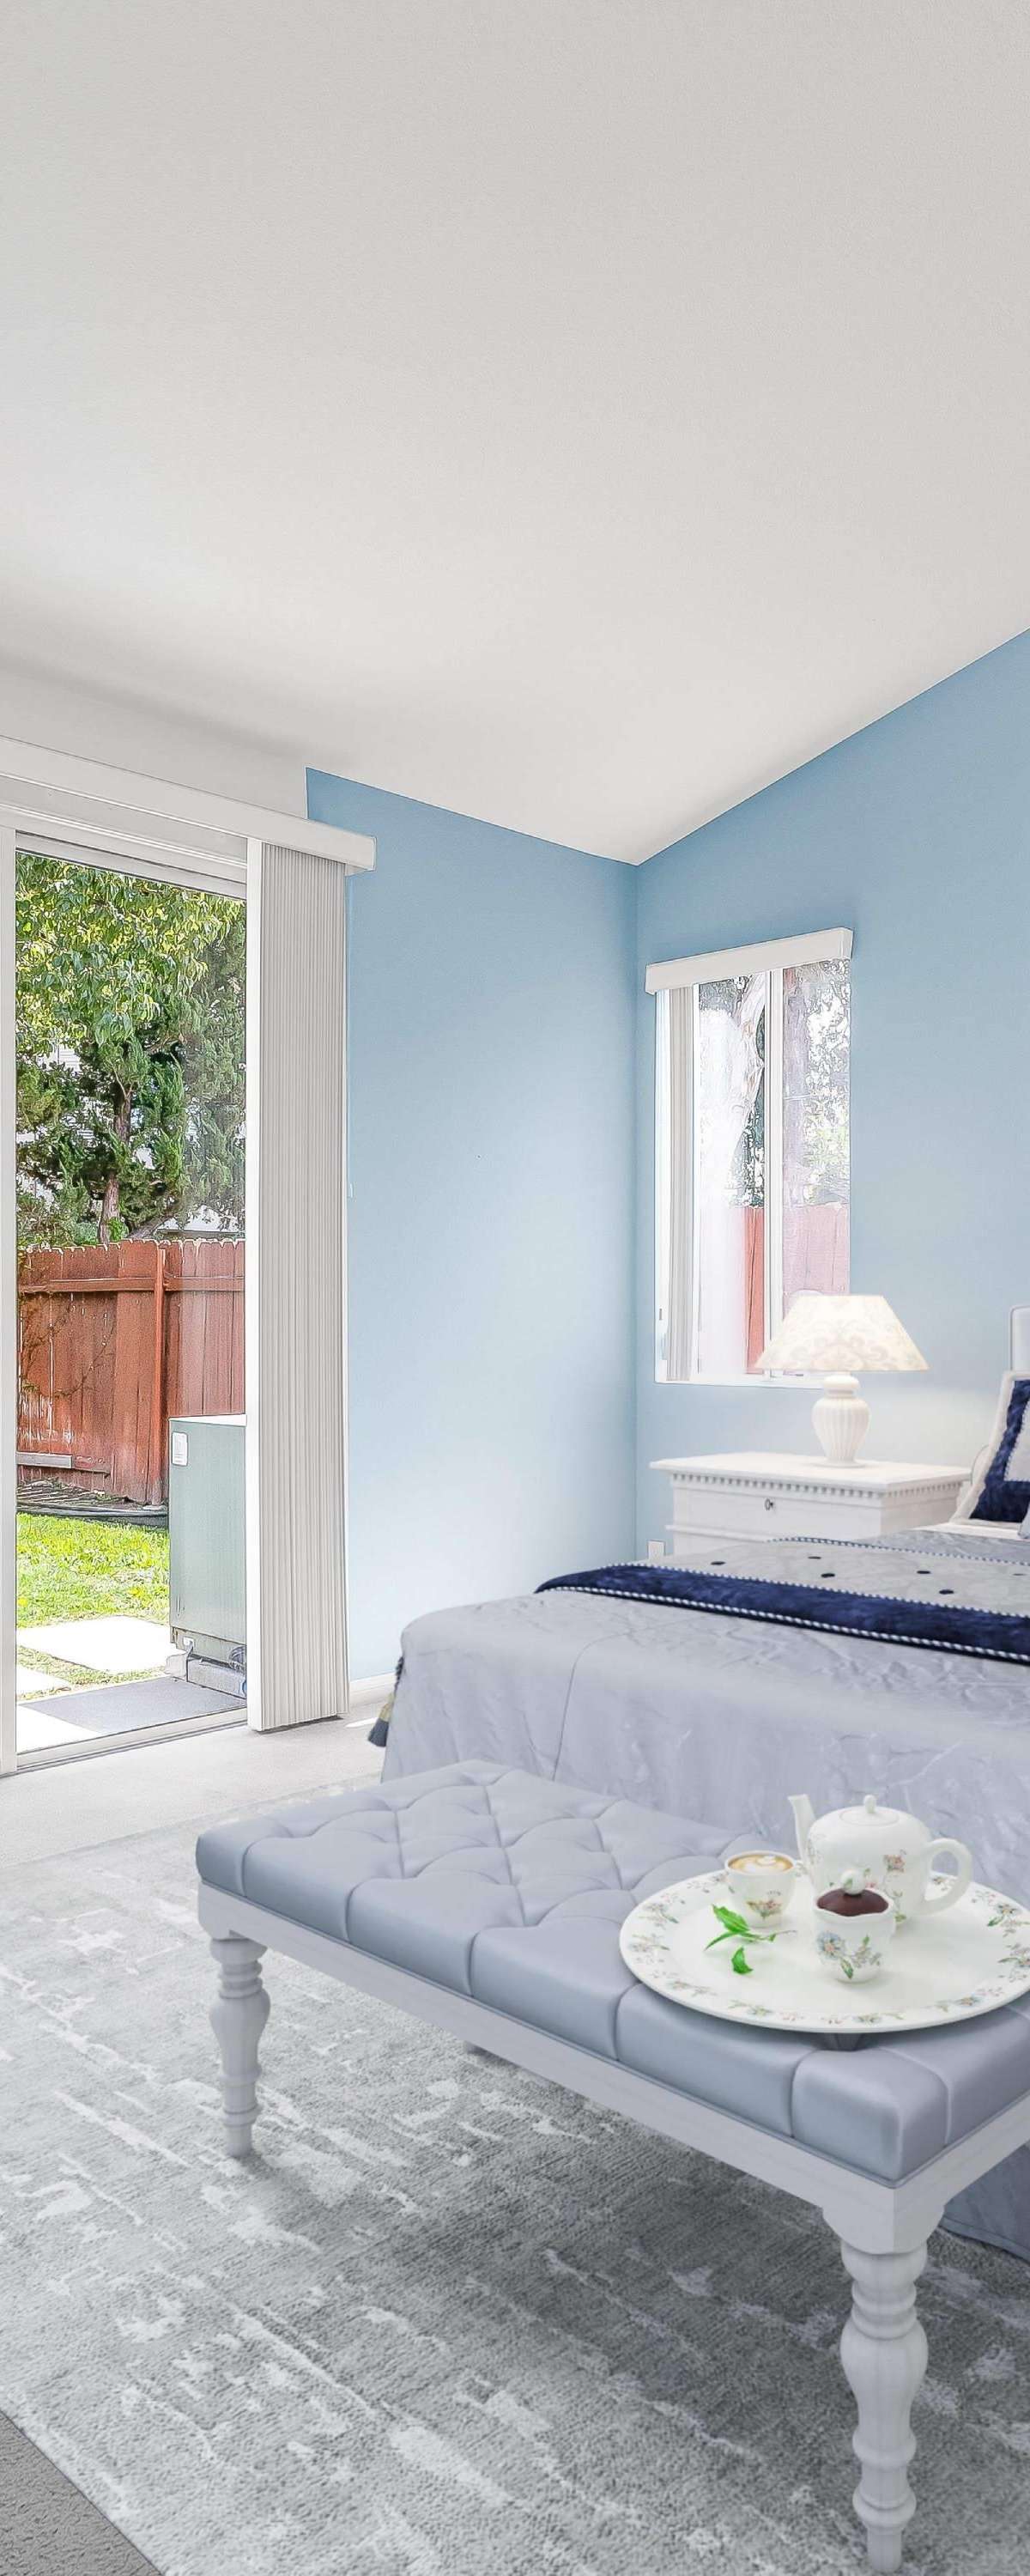 Master Bedroom Design with Light Blue Walls